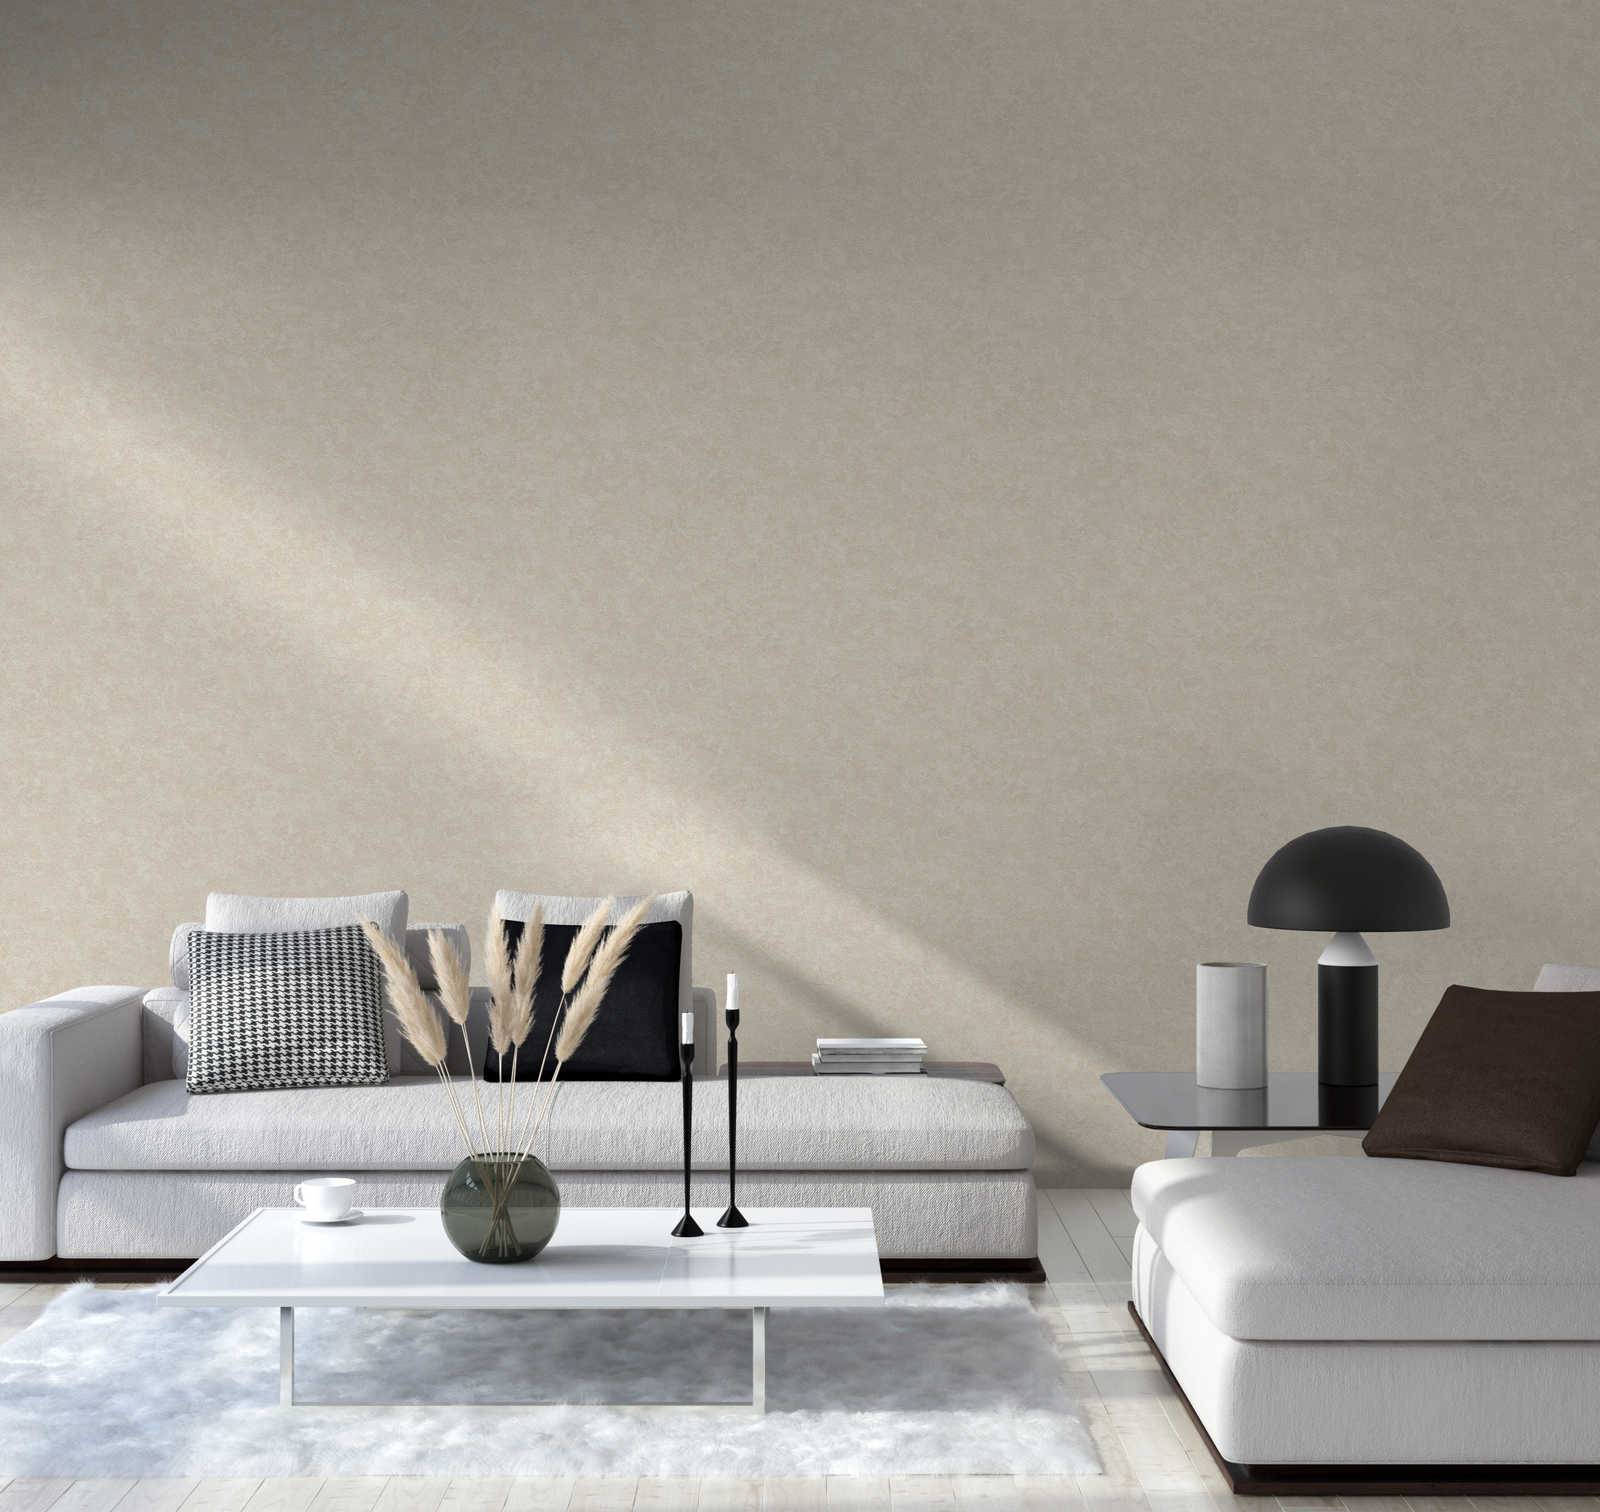             Textured wallpaper plain mottled - beige, brown
        